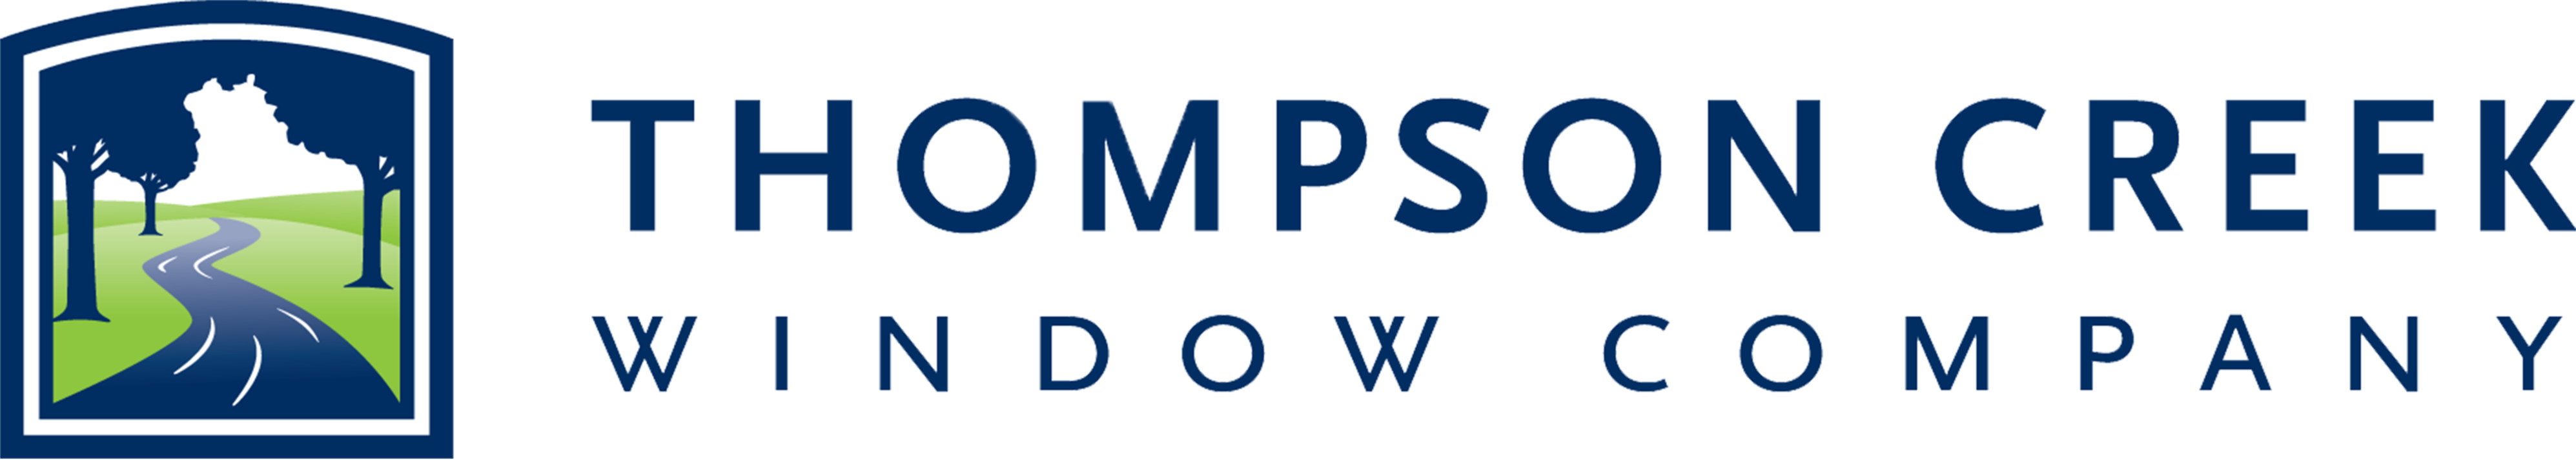 Thompson Creek Window Company logo